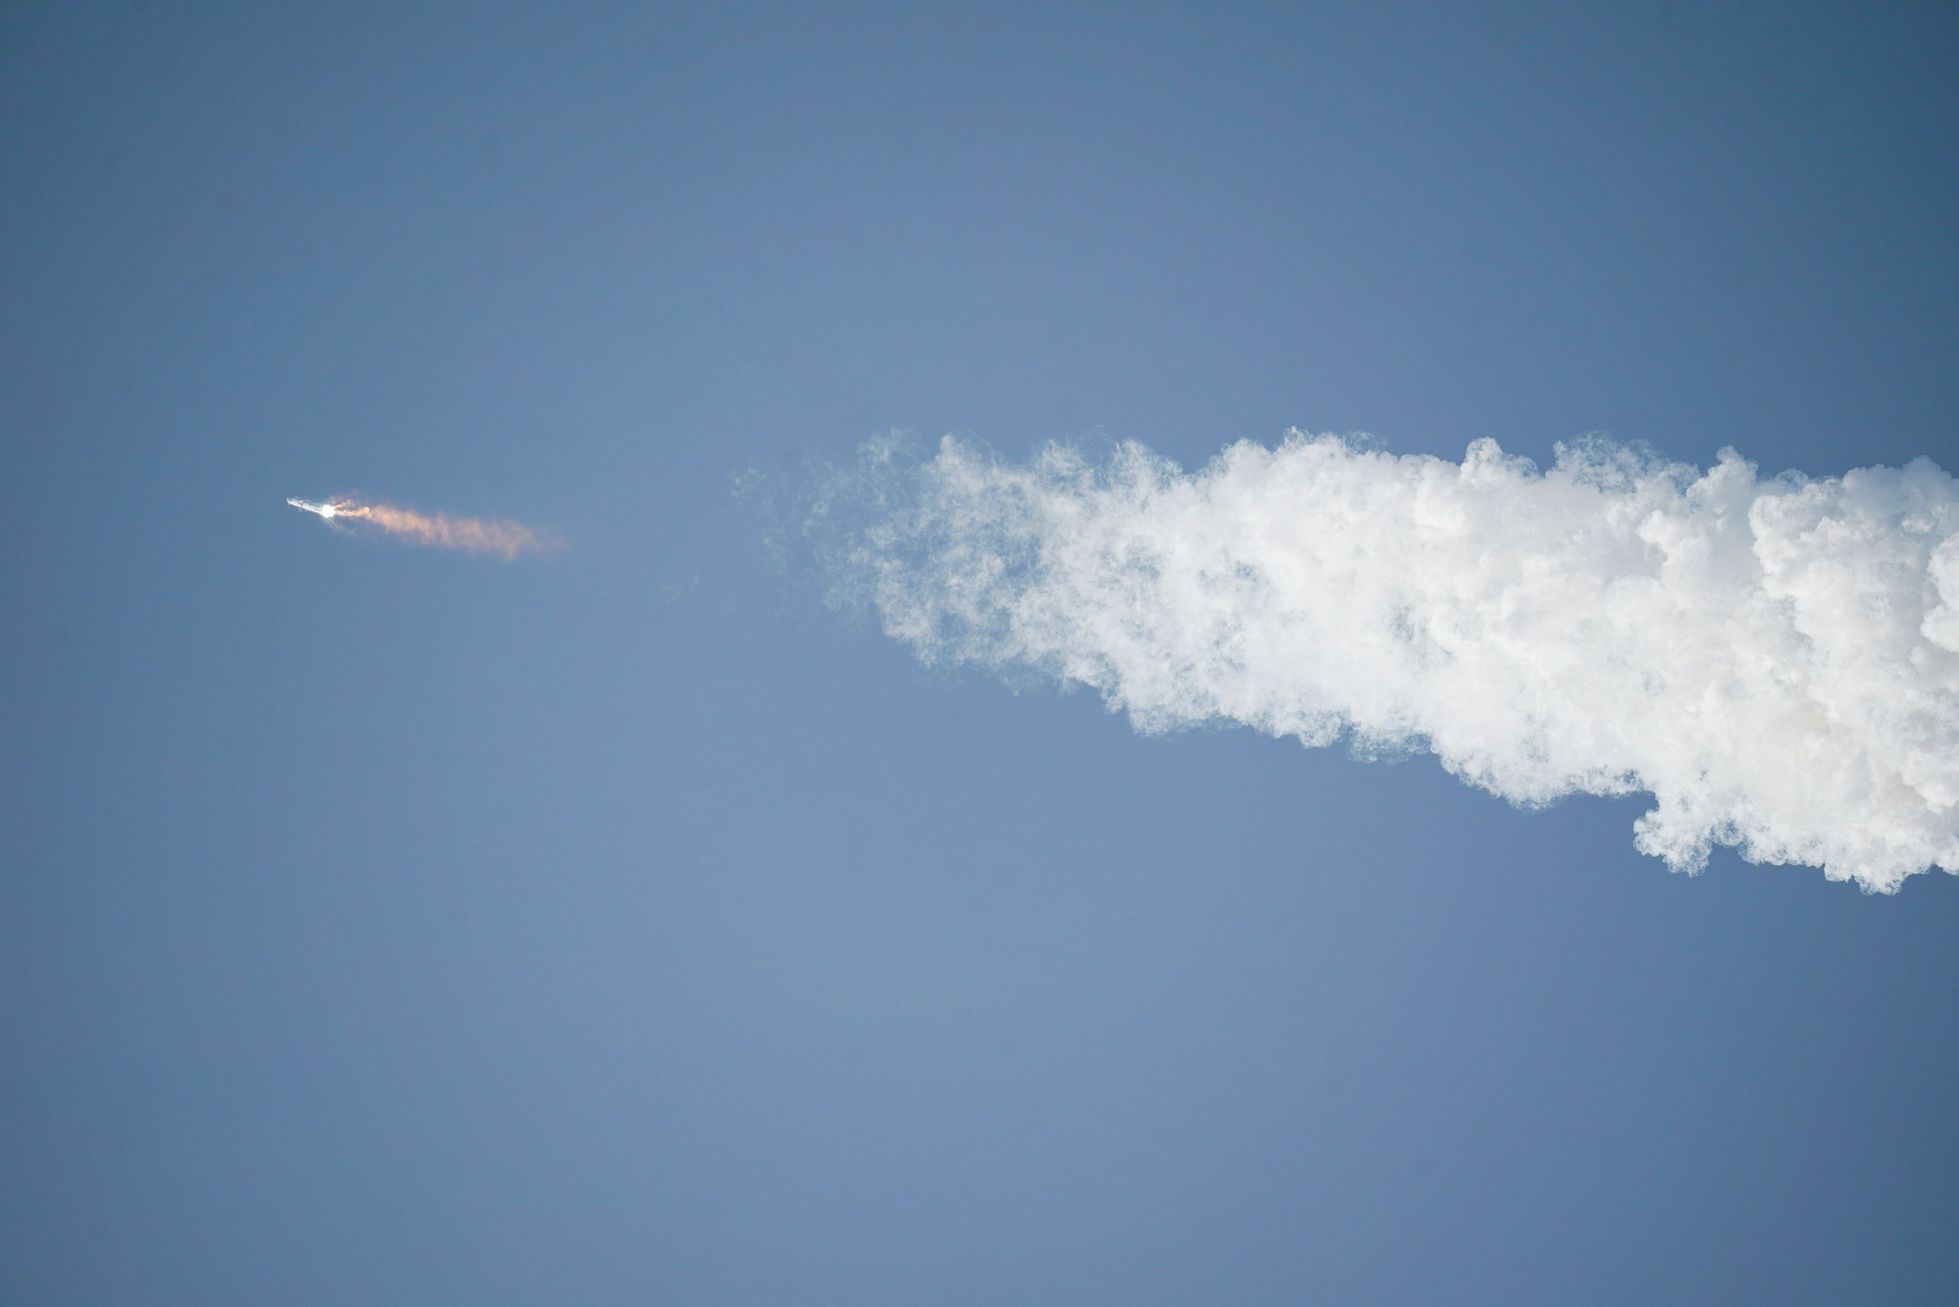 Snímek ze startu rakety SpaceX.